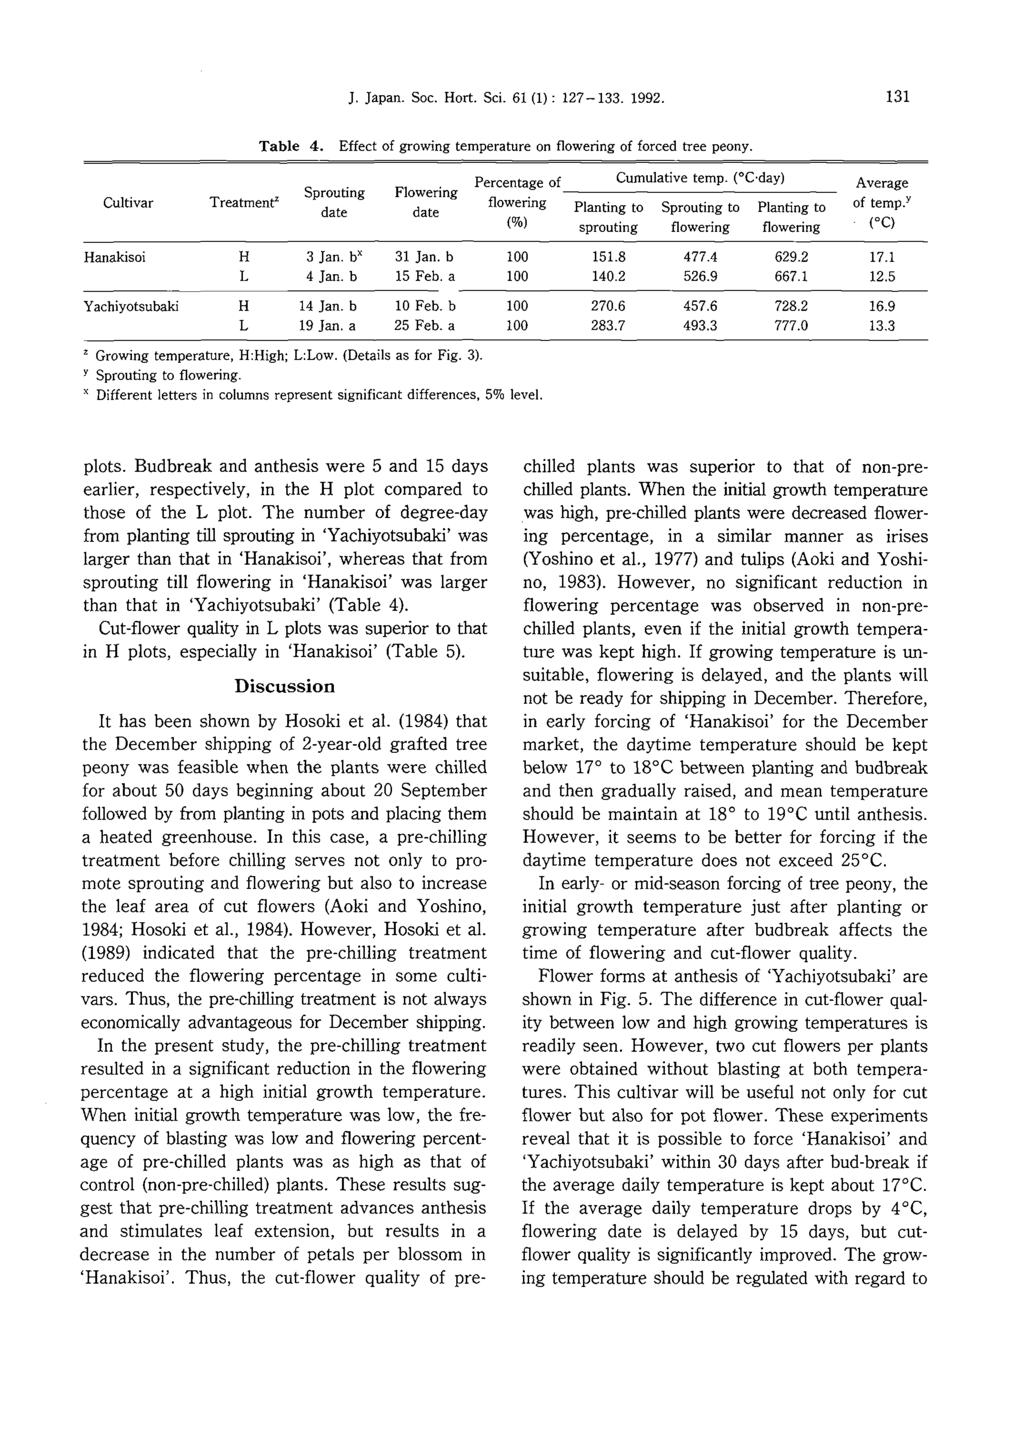 J. Japan. Soc. Hort. Sci. 61 (1) : 127-133. 1992. 131 Table 4. Effect of growing temperature on flowering of forced tree peony. plots.